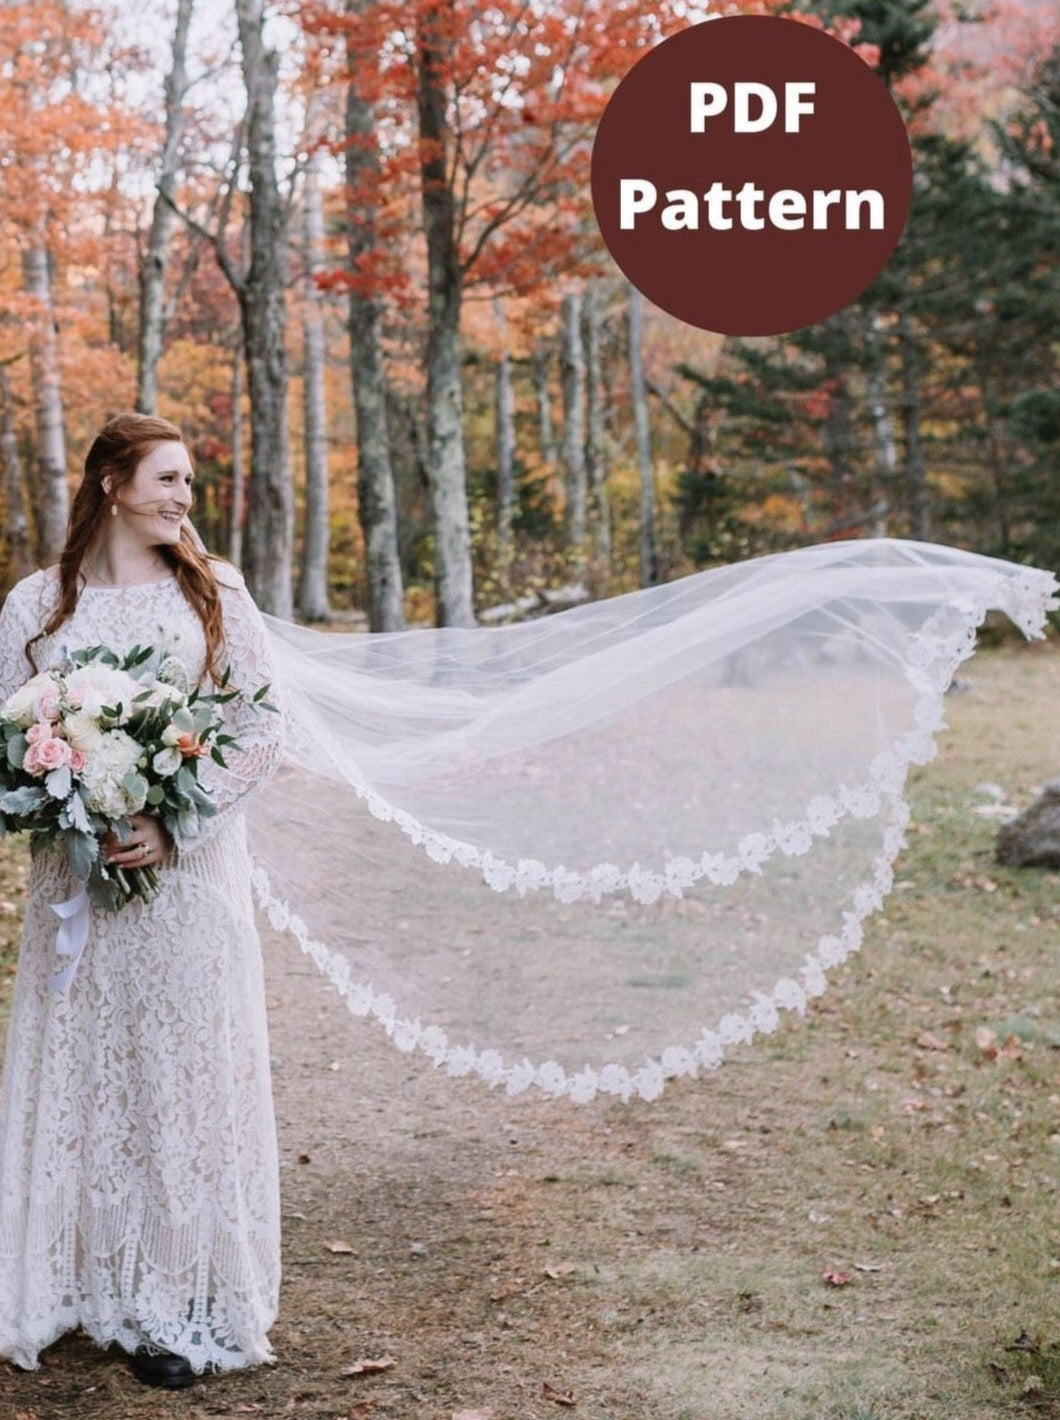 Pattern for Wedding Dress